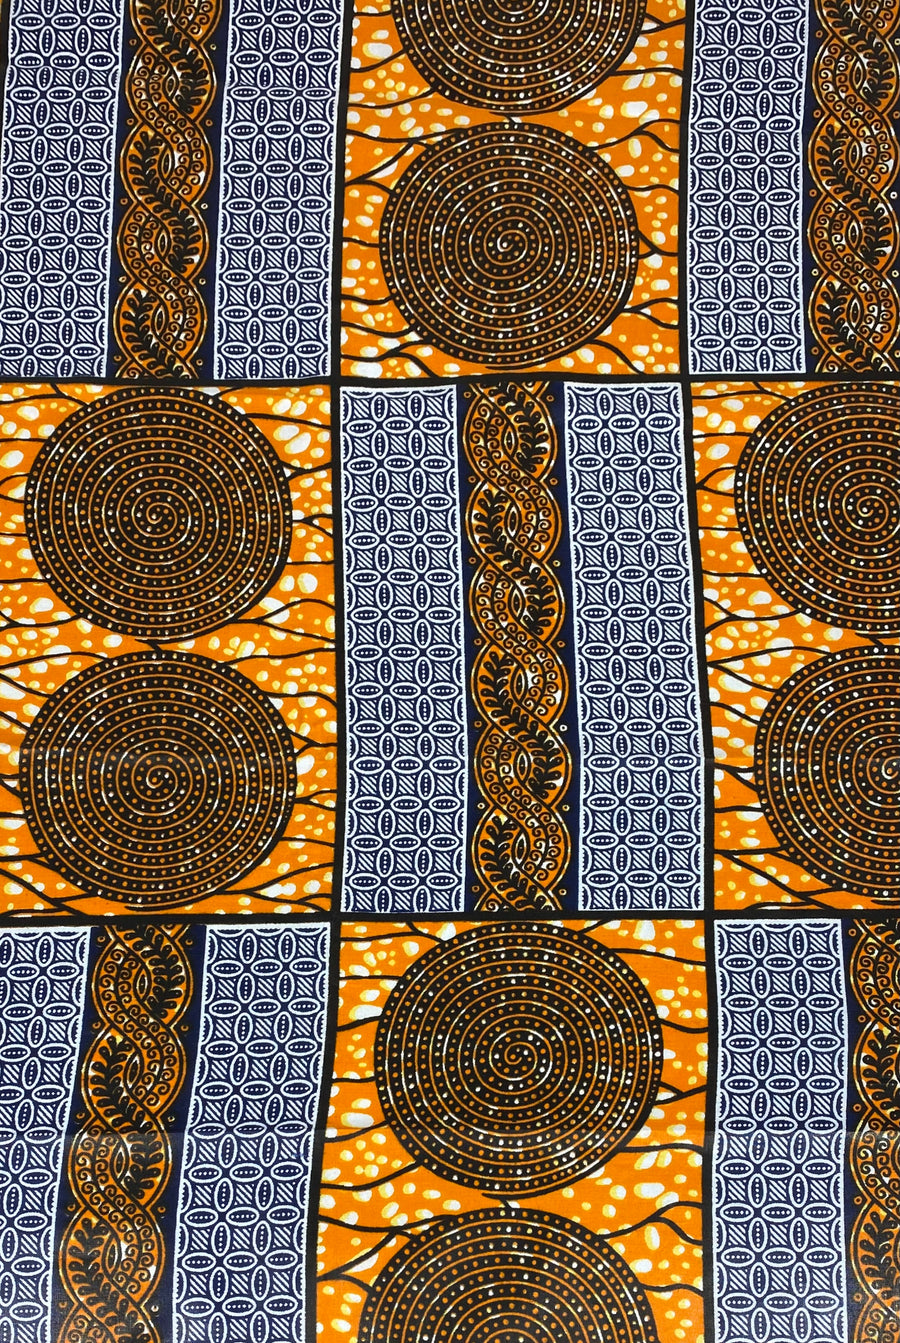 Waxed African Printed Cotton - Orange / Blue / Black / White